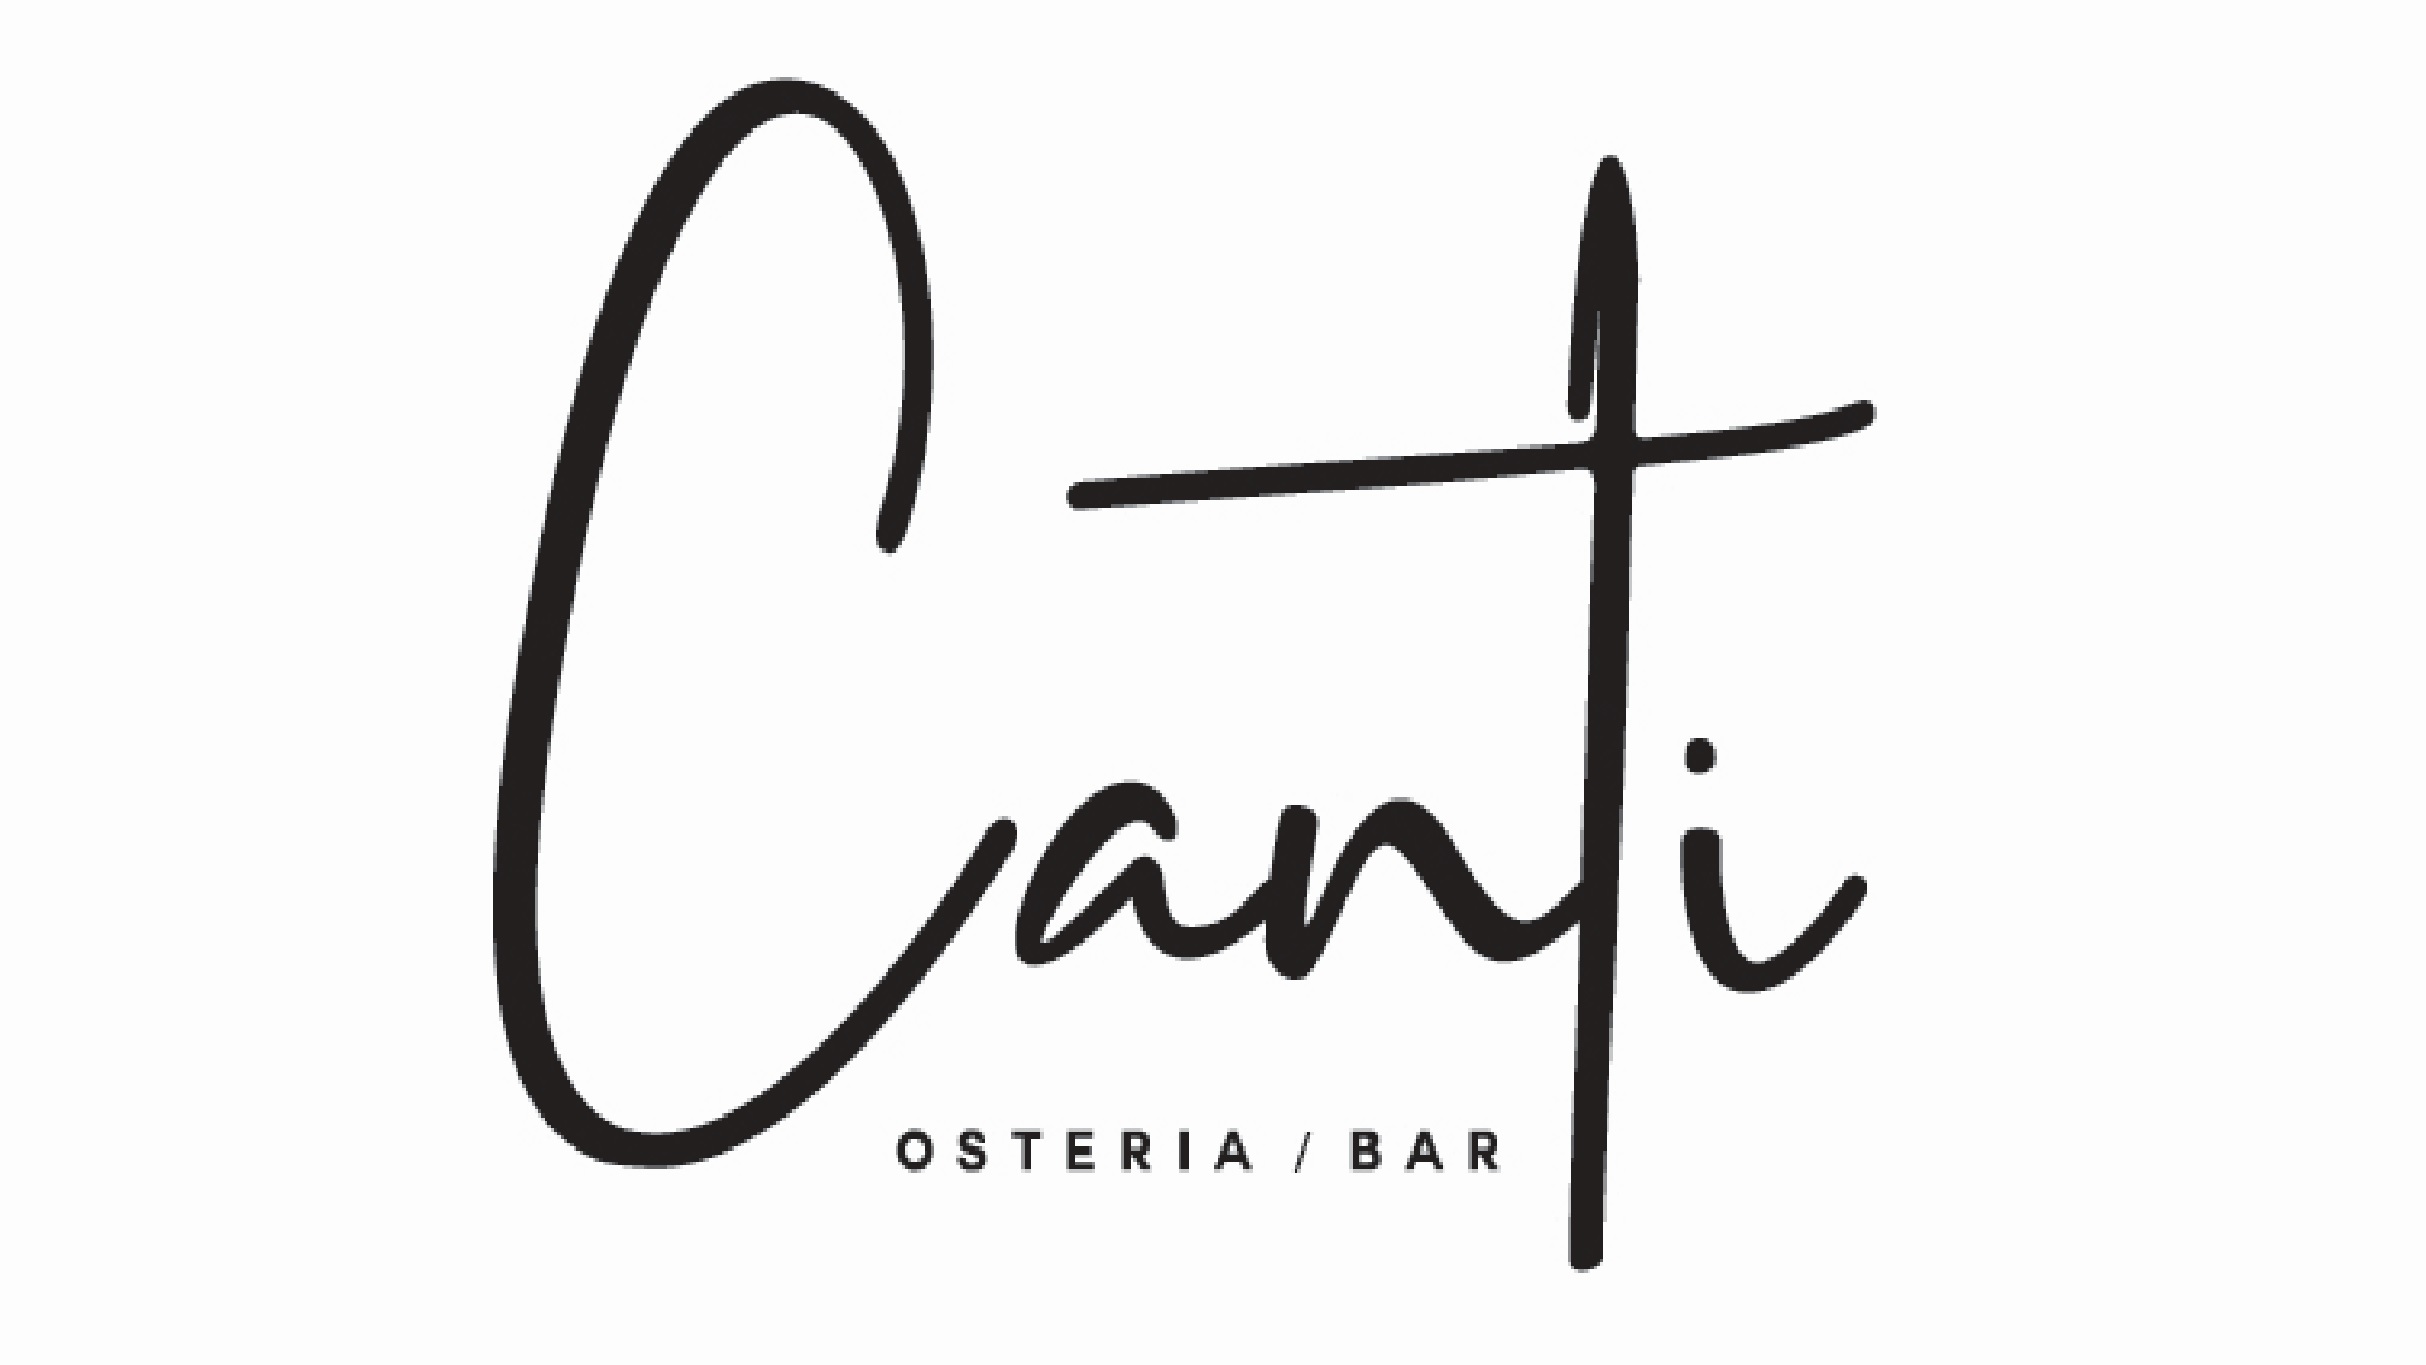 Centre Bell - Repas Restaurant Canti - Chris Brown